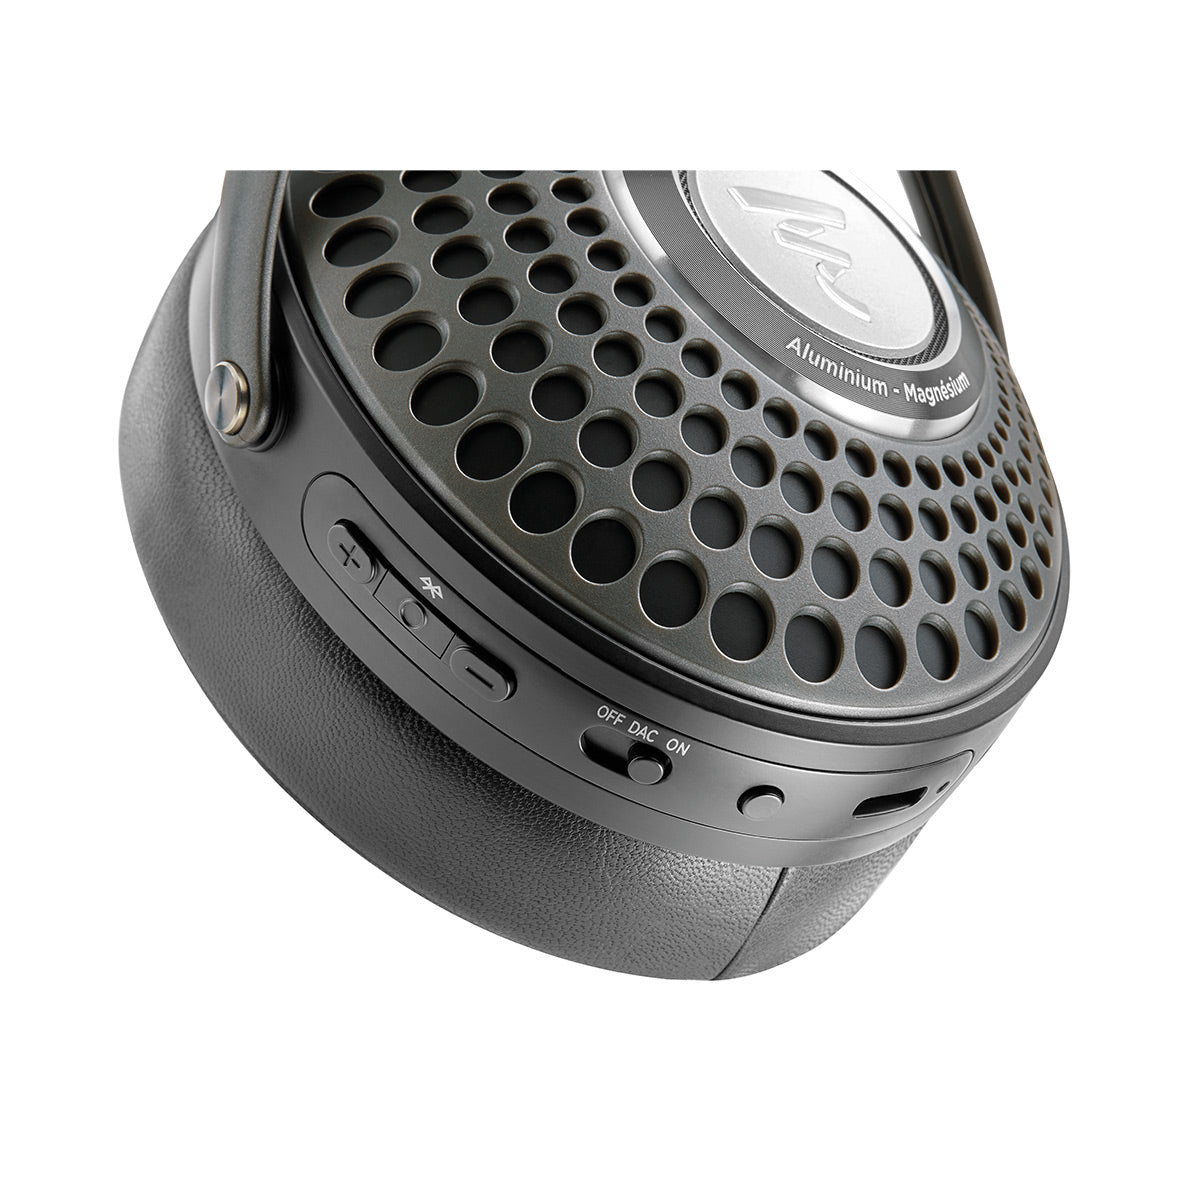 Focal Bathys Over-Ear Hi-Fi Bluetooth Wireless Headphones with Active Noise Cancelation